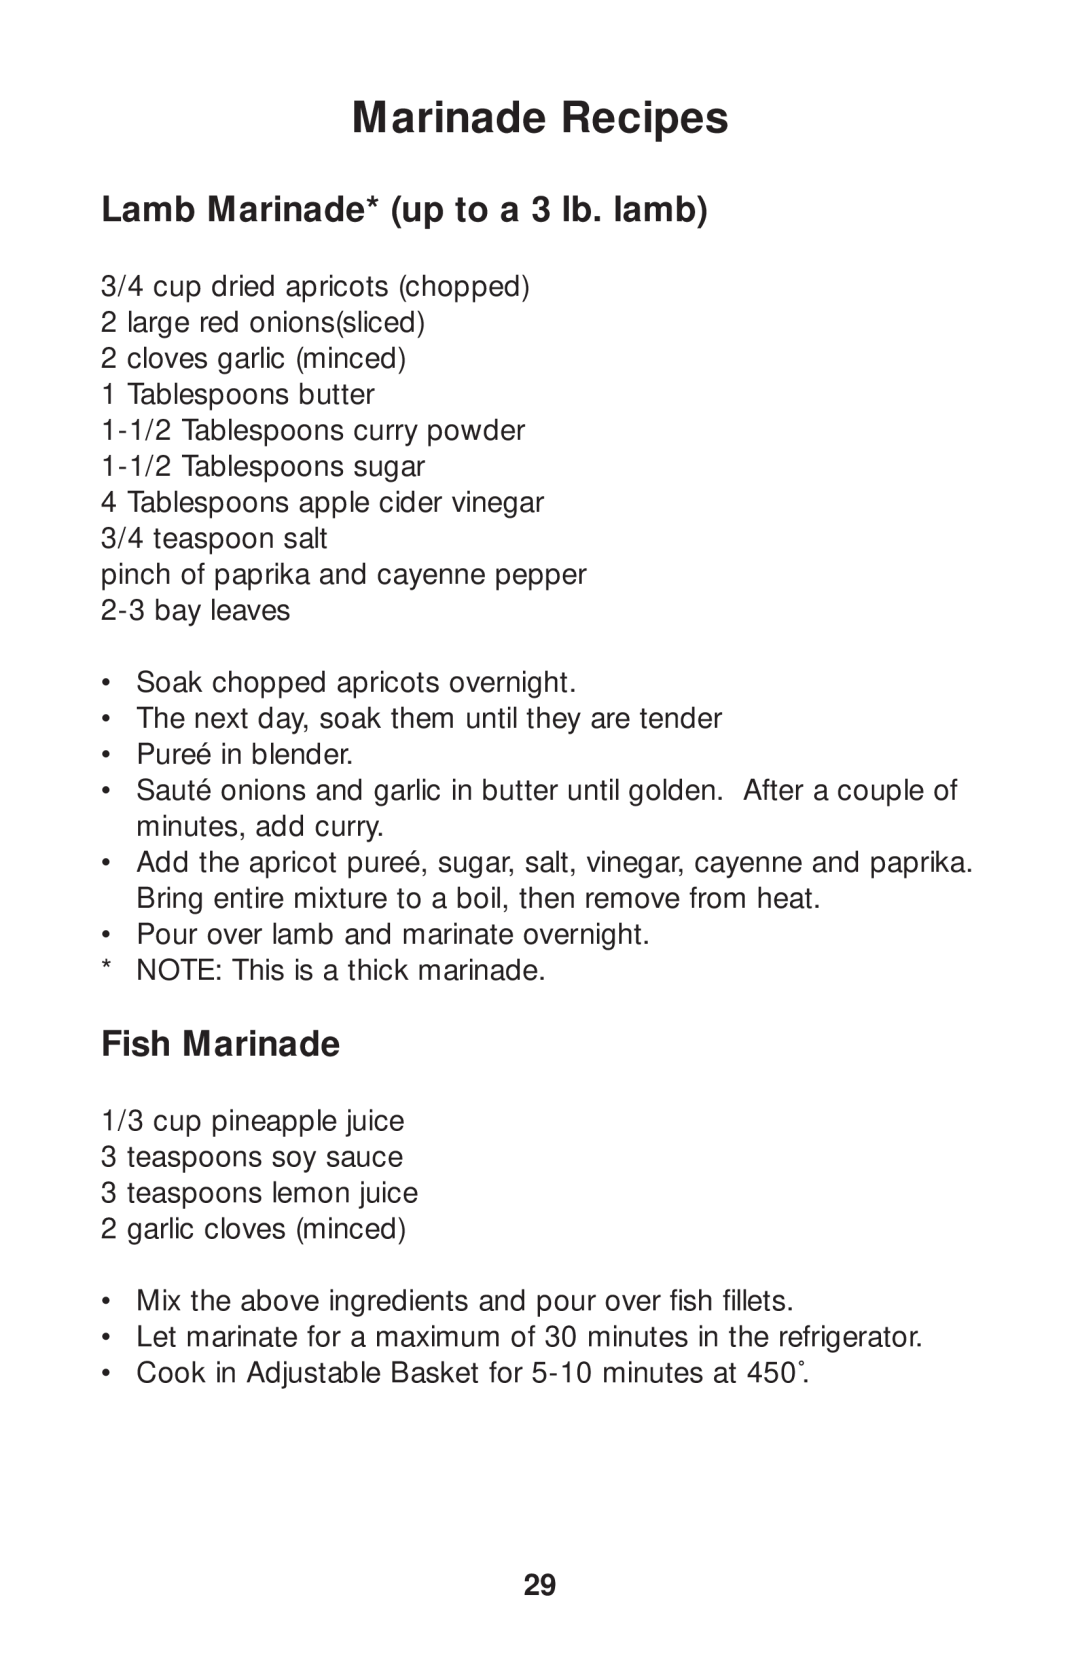 Salton GR80B owner manual Marinade Recipes, Lamb Marinade* up to a 3 lb. lamb, Fish Marinade 